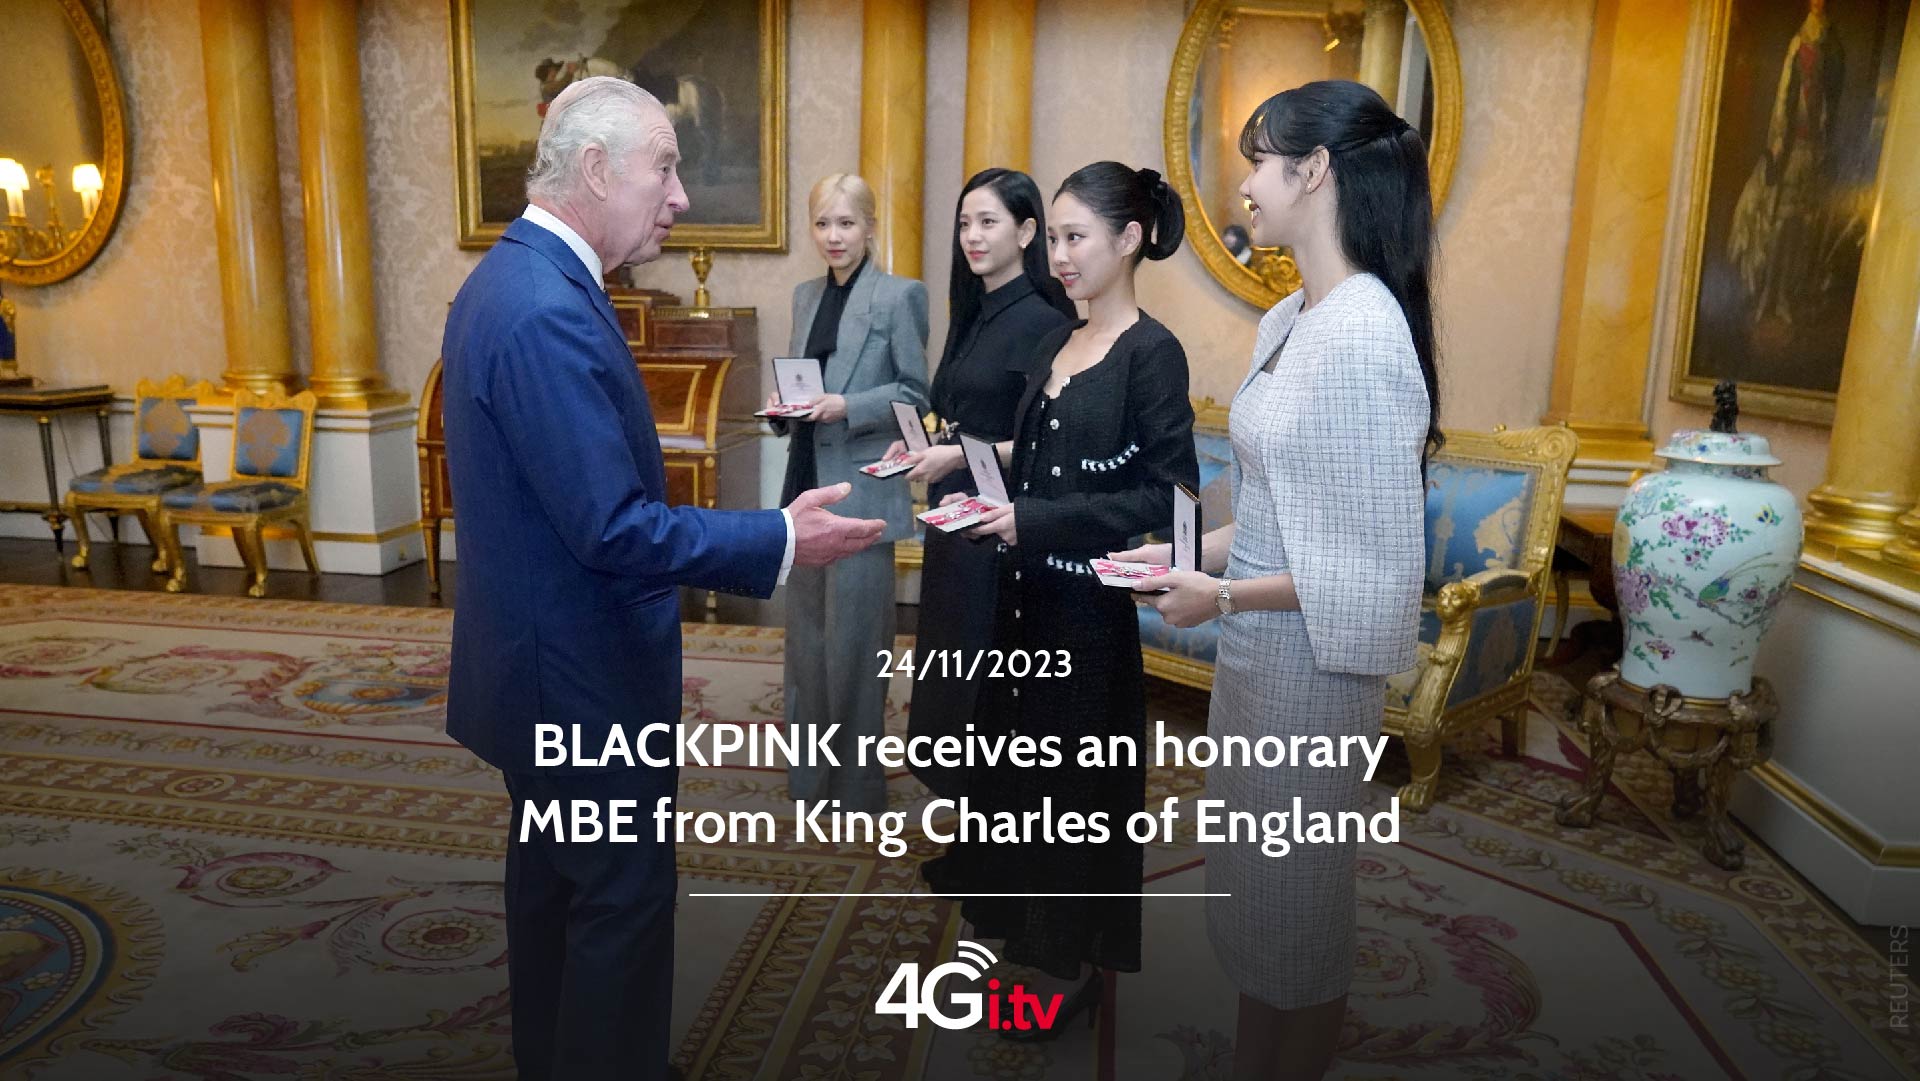 Lesen Sie mehr über den Artikel BLACKPINK receives an honorary MBE from King Charles of England